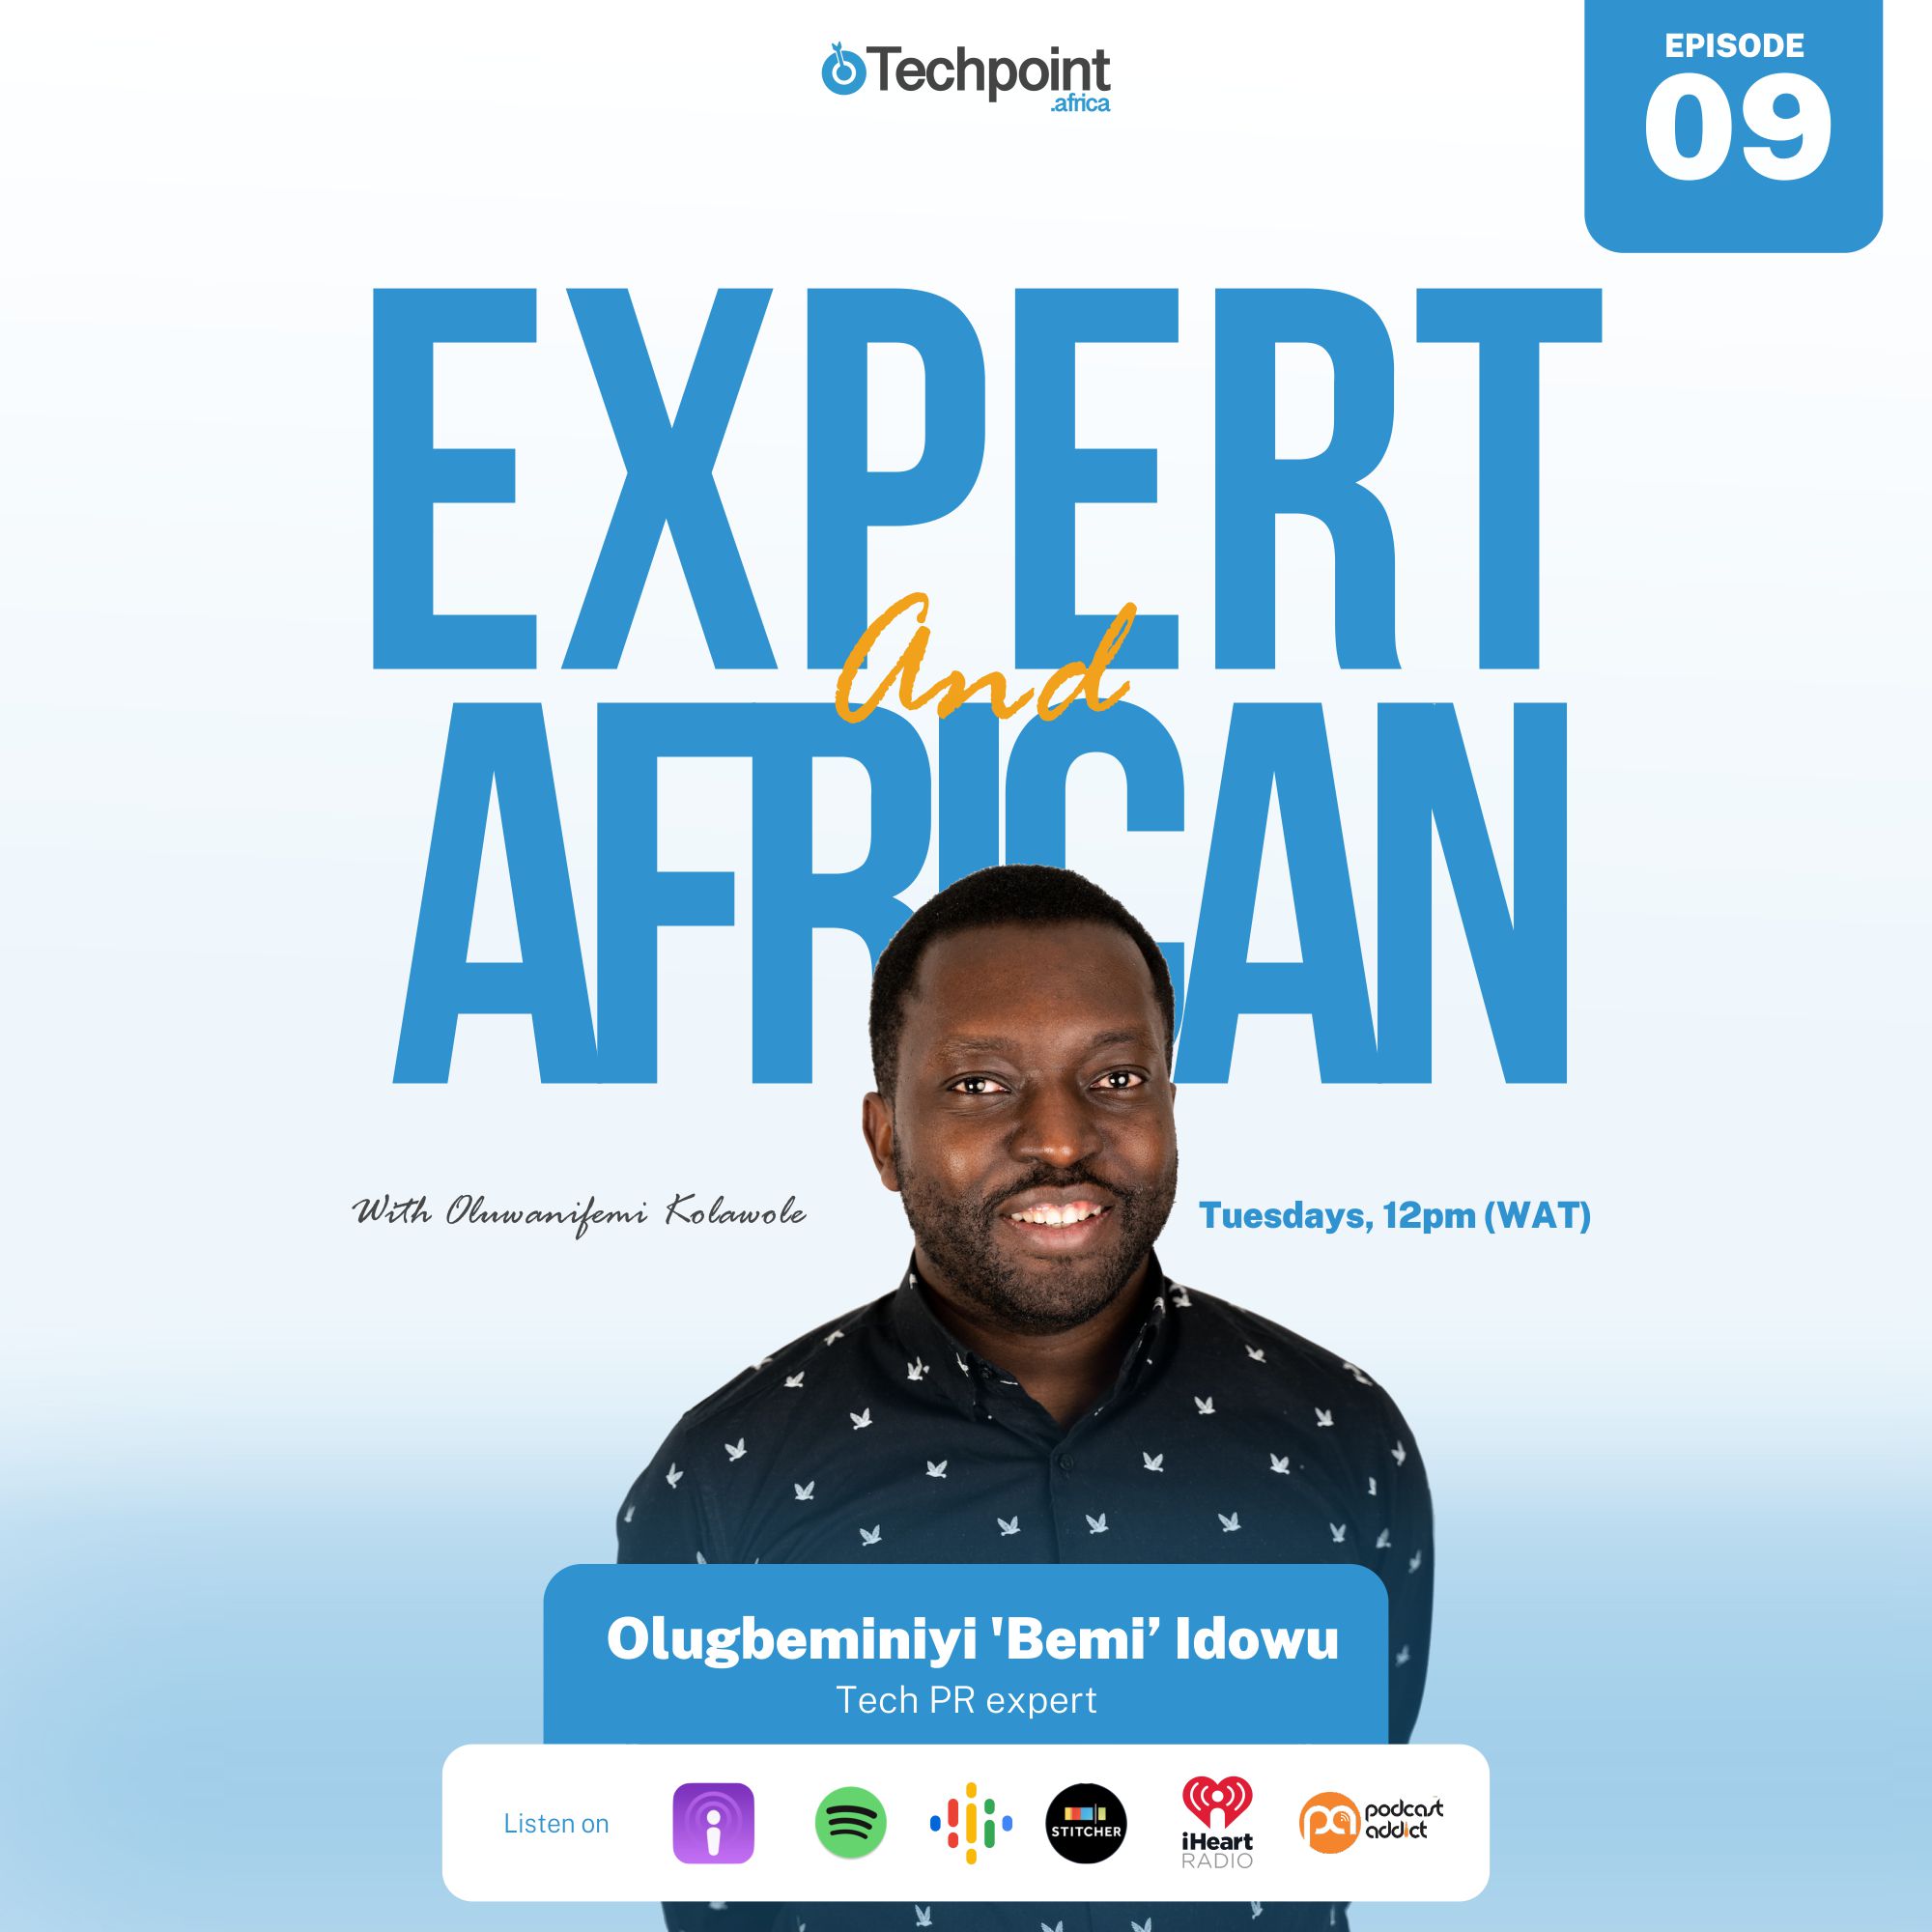 Olugbeminiyi 'Bemi' Idowu: Tech PR expert